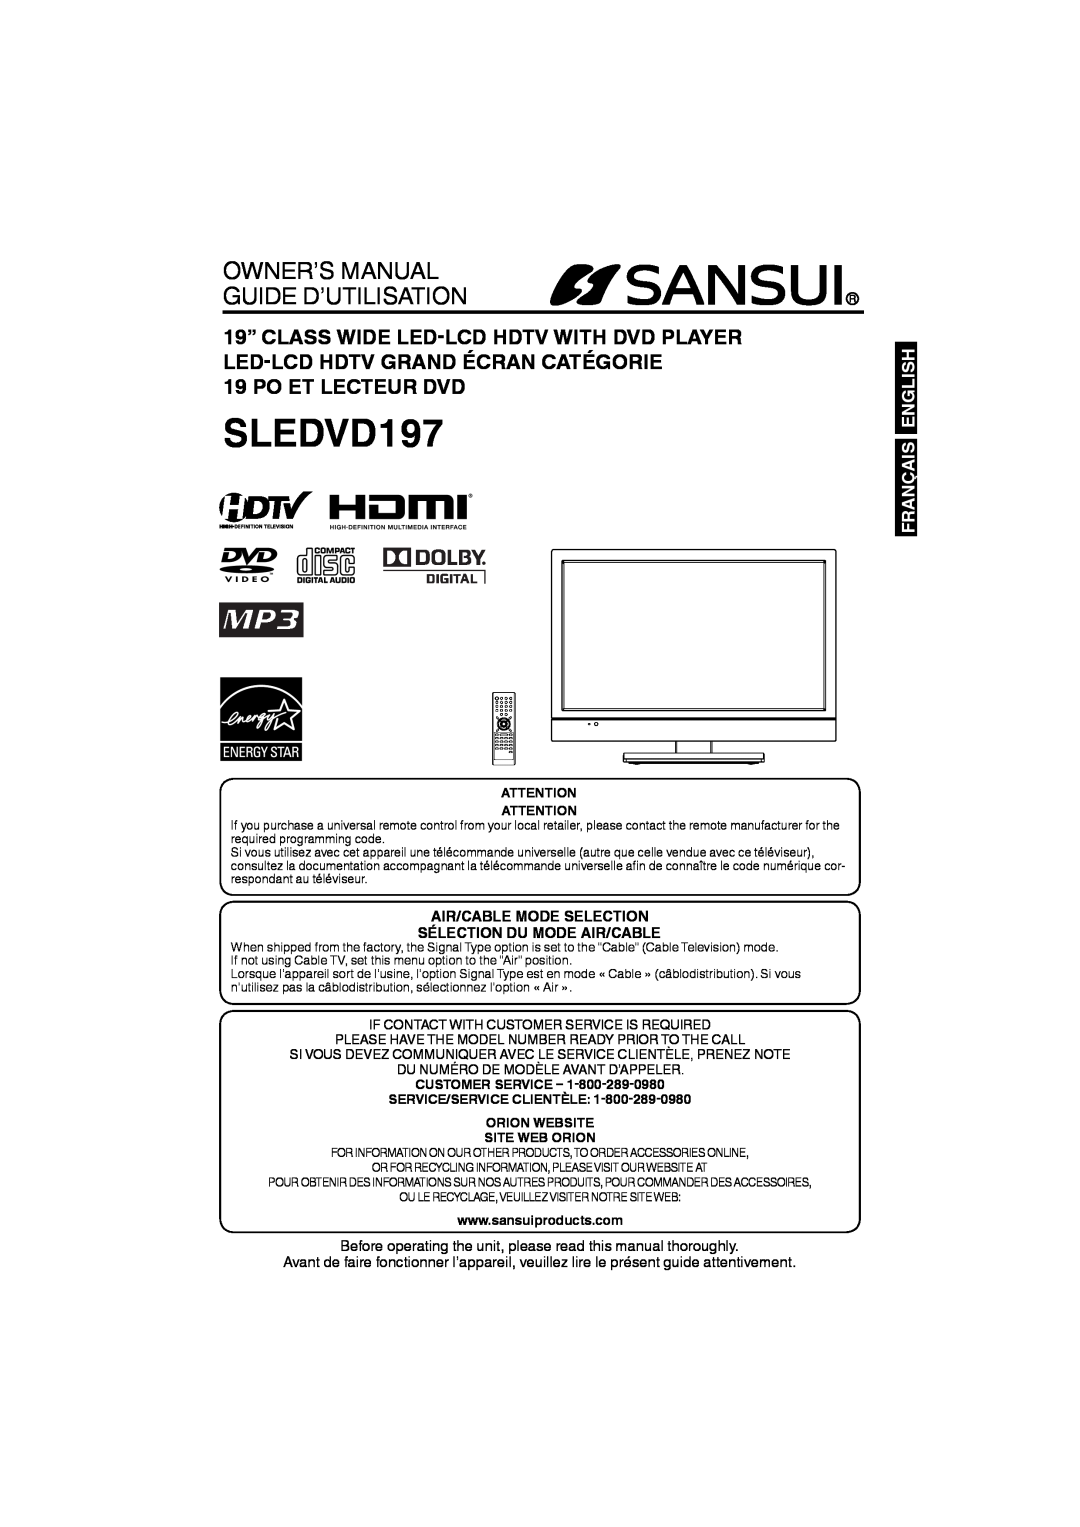 Sansui SLEDVD197 owner manual Air/Cable Mode Selection Sélection Du Mode Air/Cable, Owner’S Manual Guide D’Utilisation 